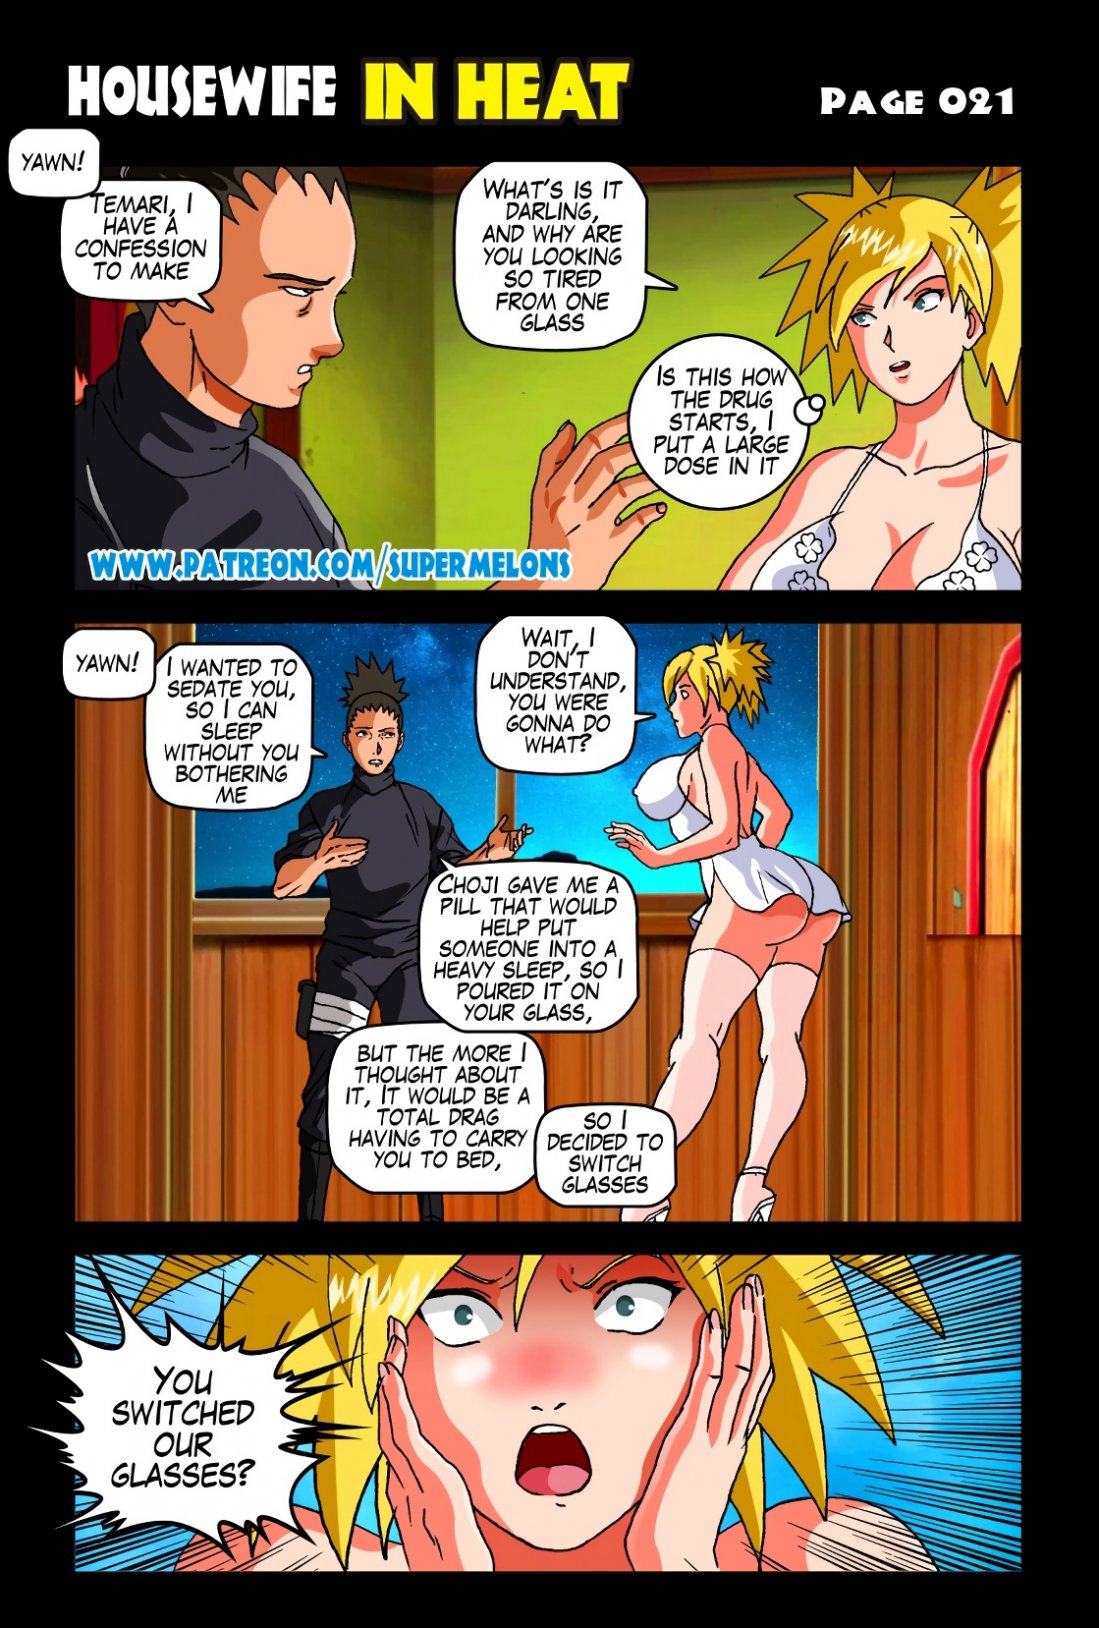 Housewife Porn Comics - Housewife In Heat - Temari porn comic - the best cartoon porn comics, Rule  34 | MULT34